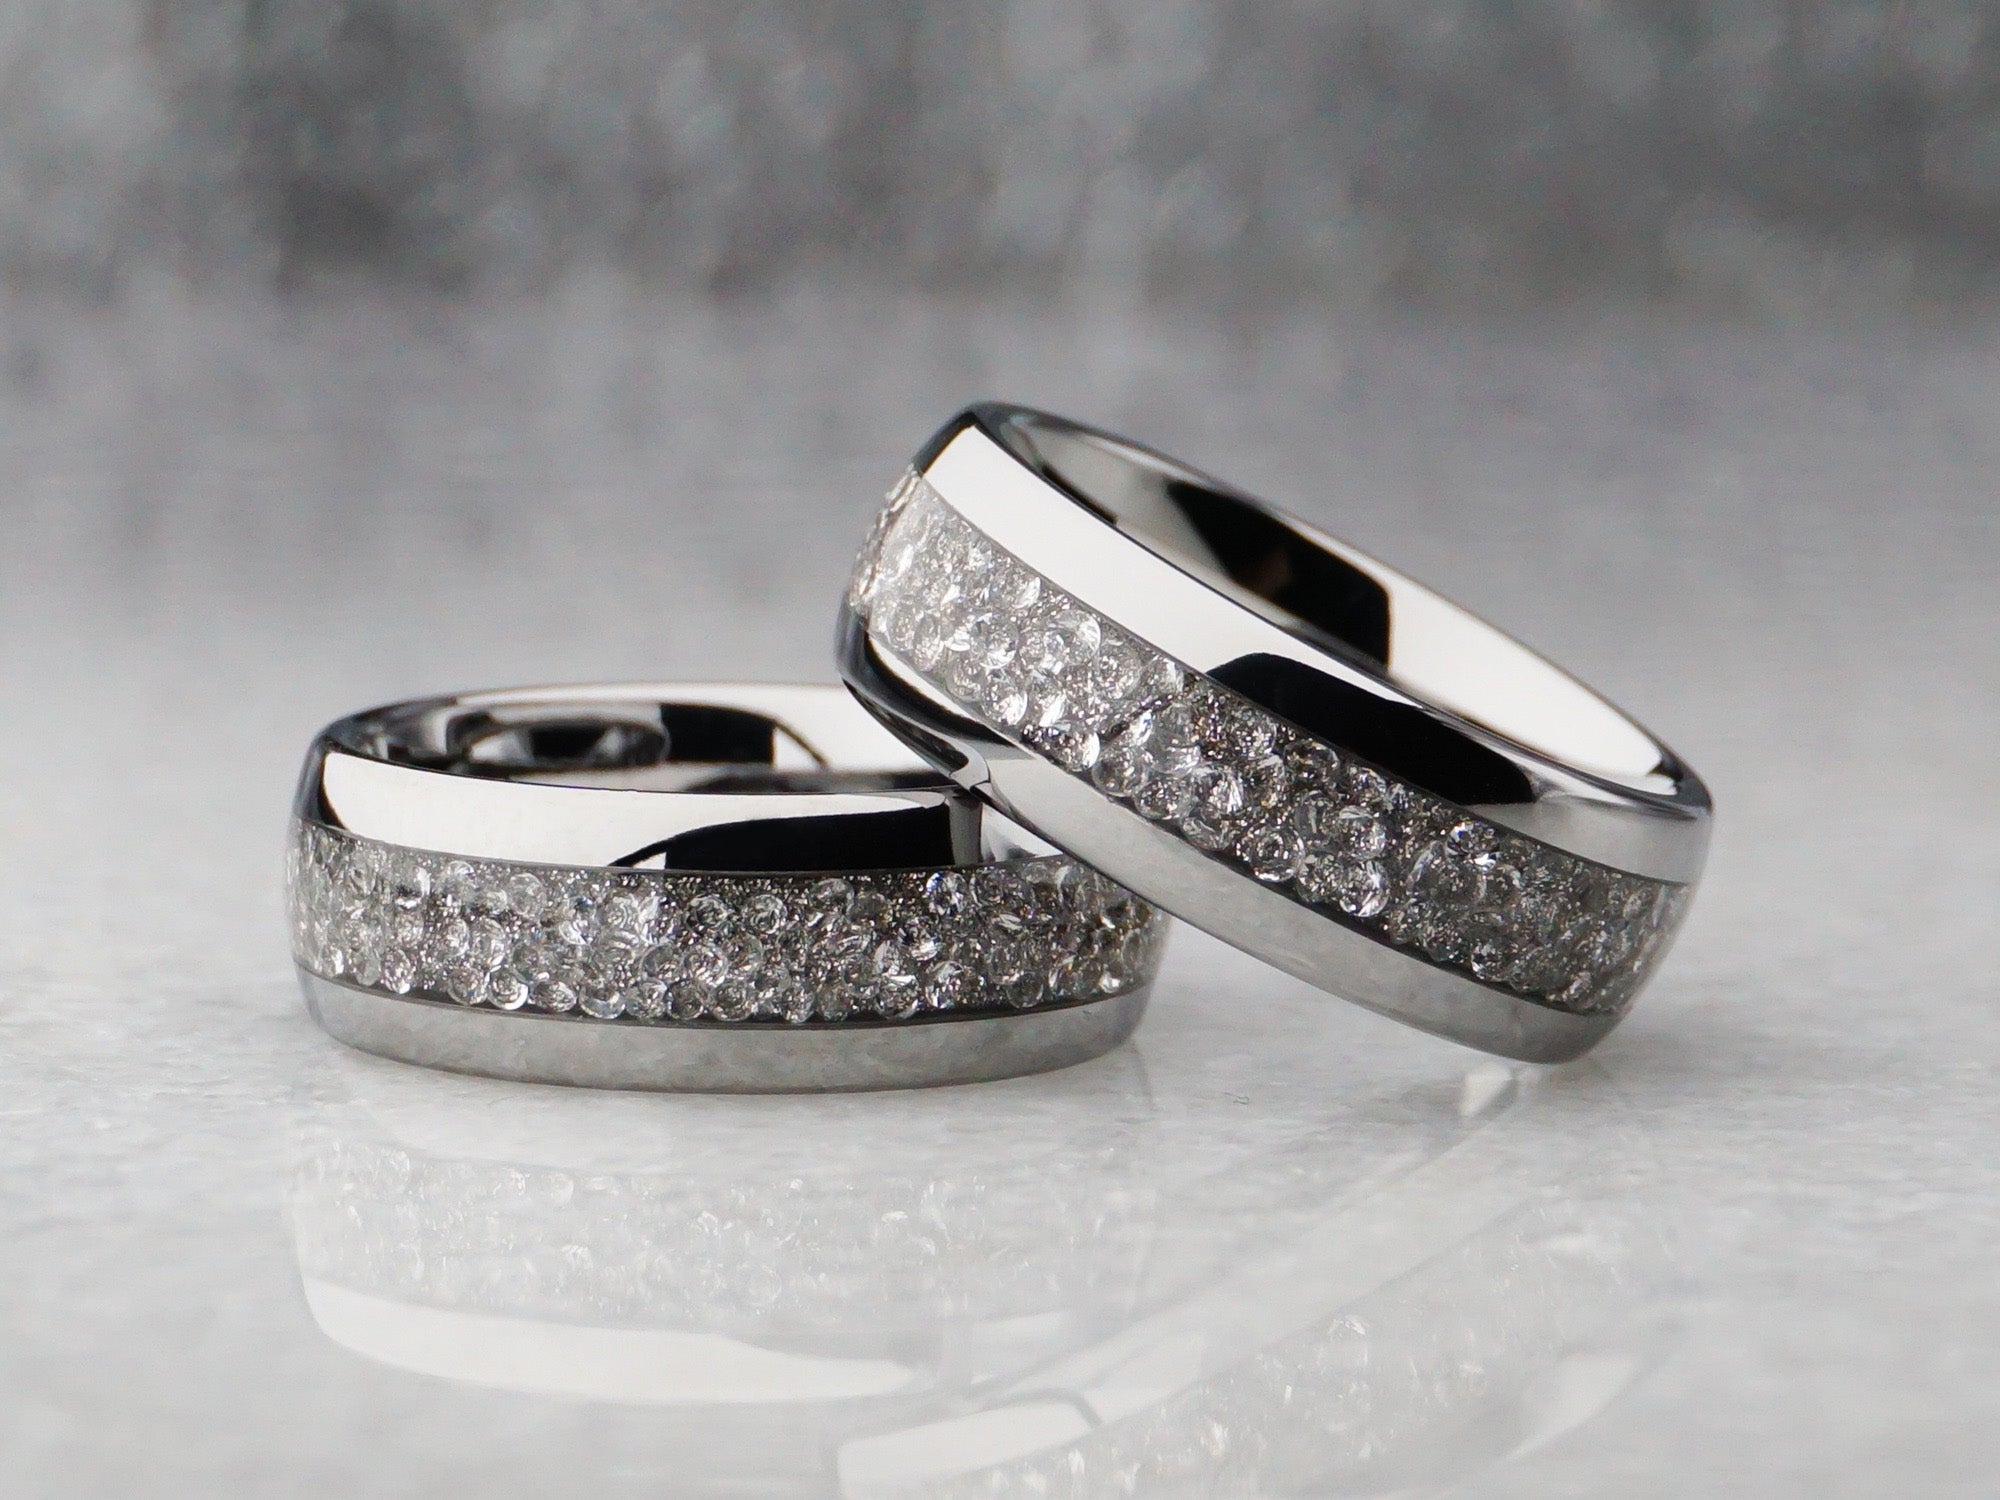 8mm white diamond ring, polished silver tungsten ring with lab diamond gemstone inlay, modern mens wedding ring